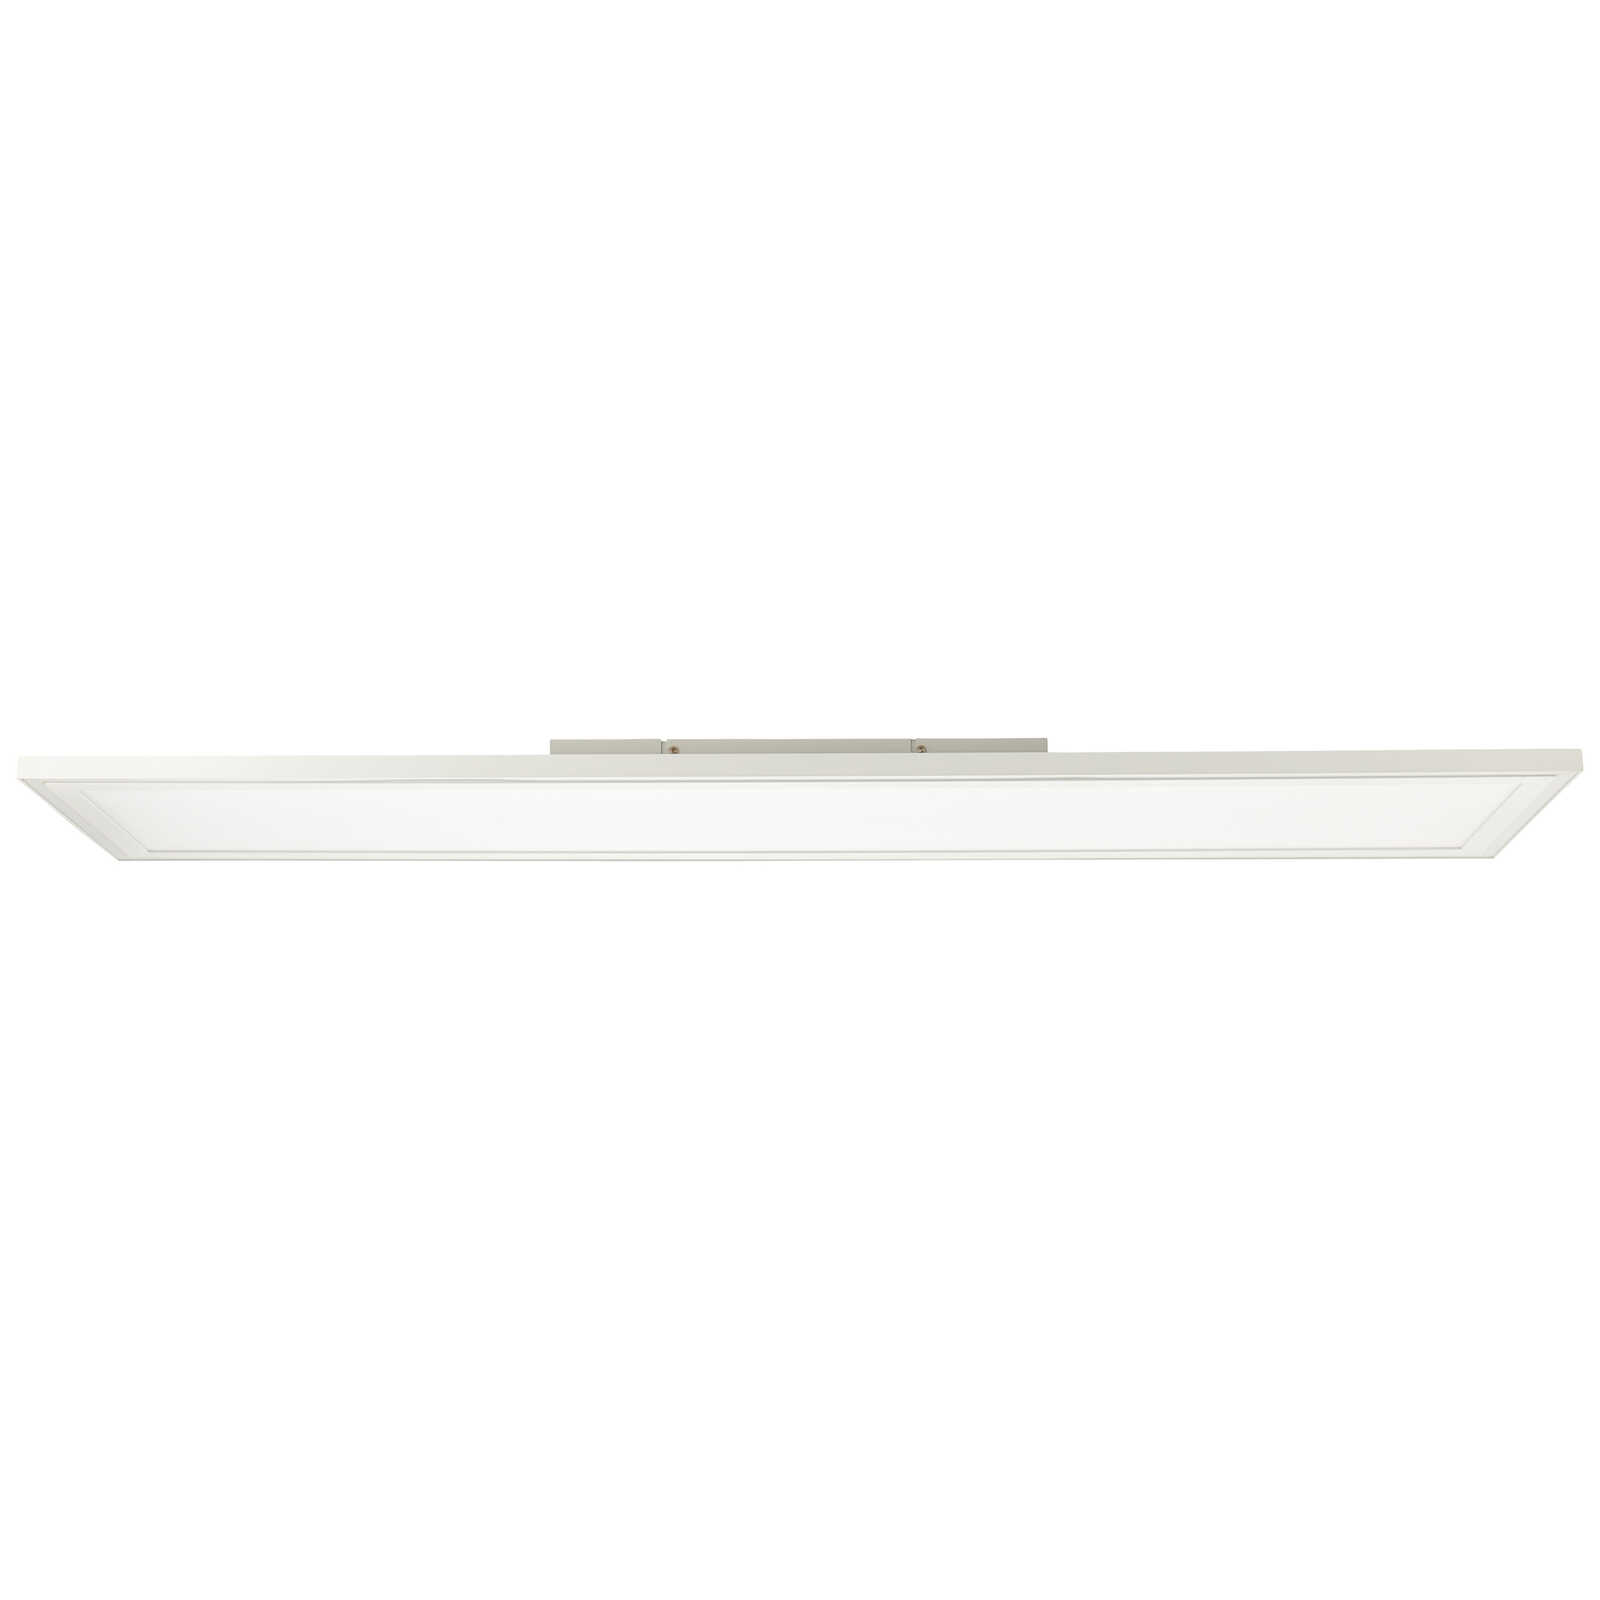             Metal ceiling light - Klaas 3 - White
        